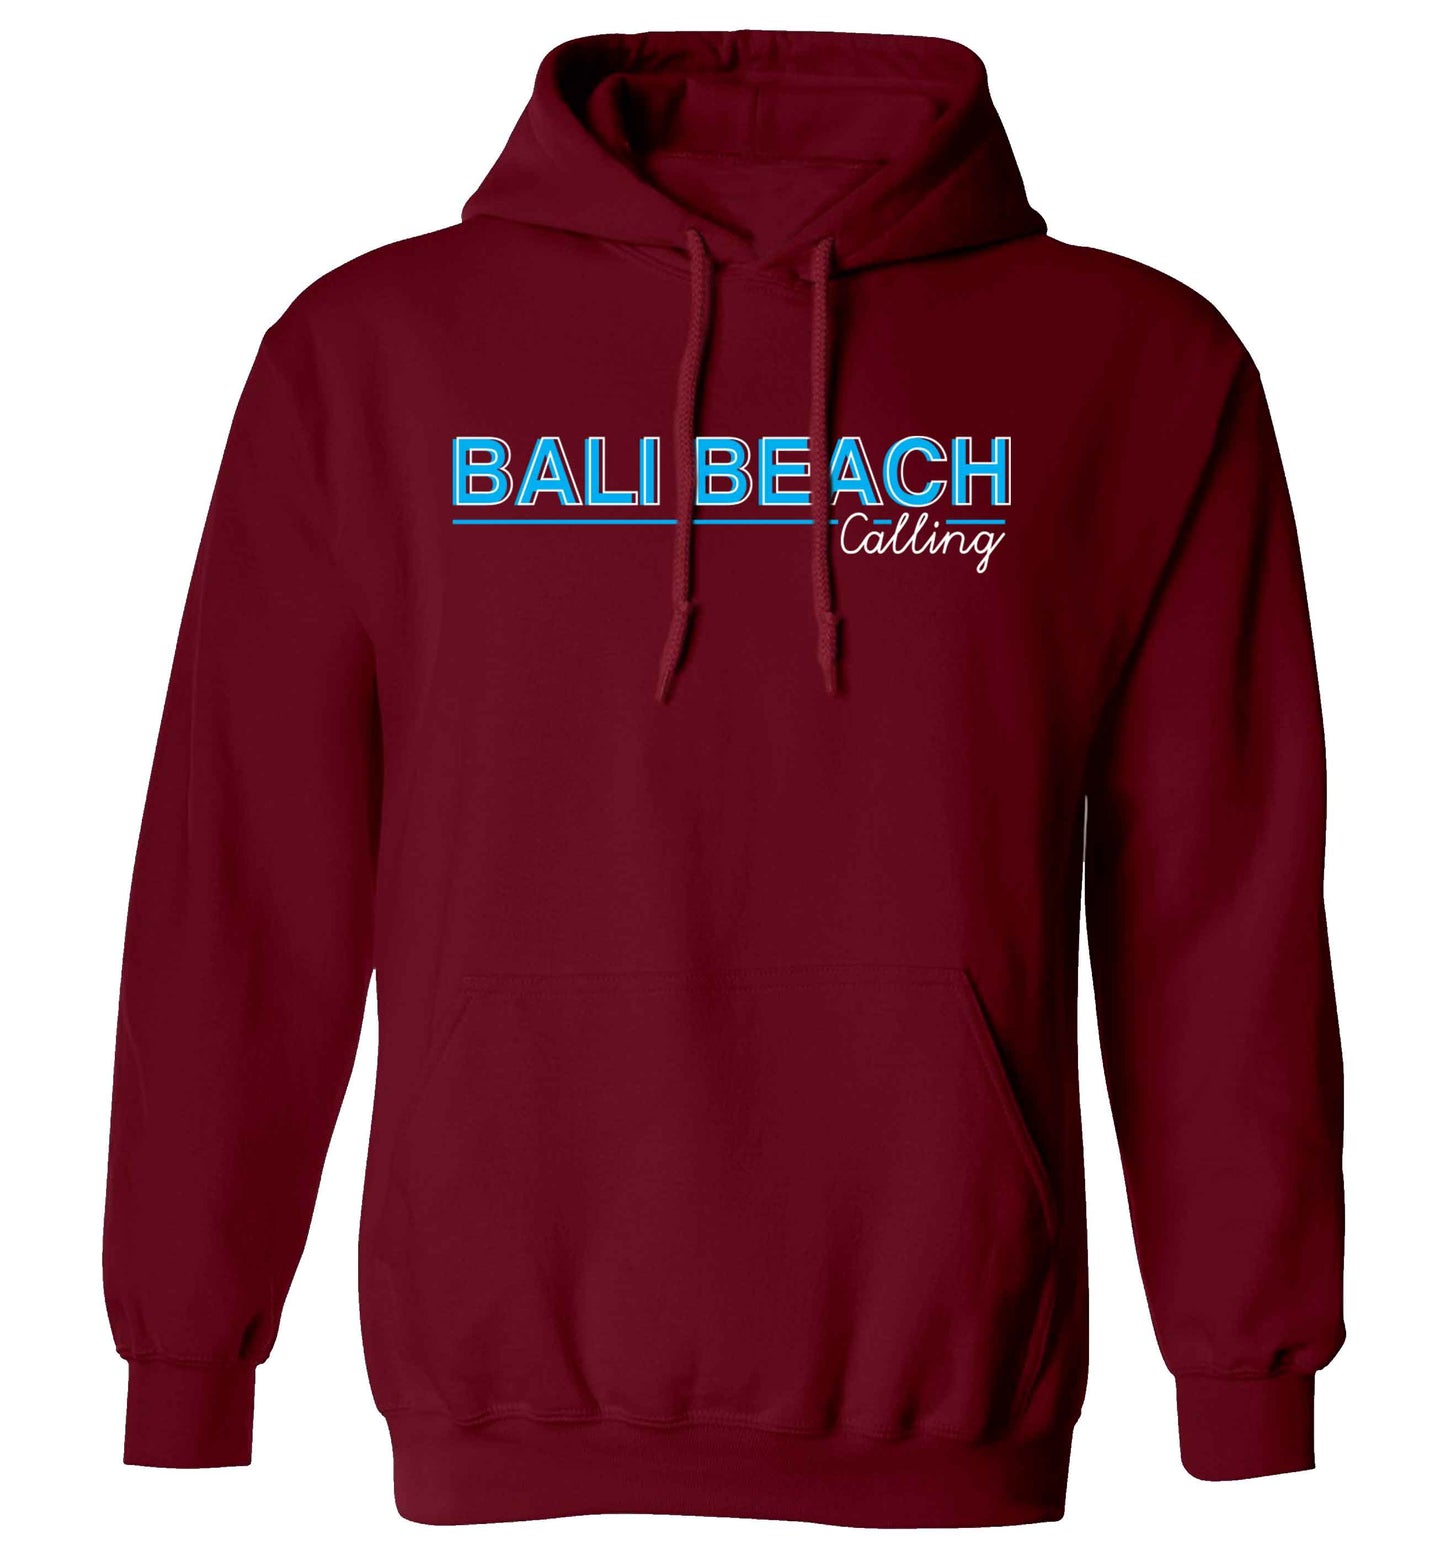 Bali beach calling adults unisex maroon hoodie 2XL